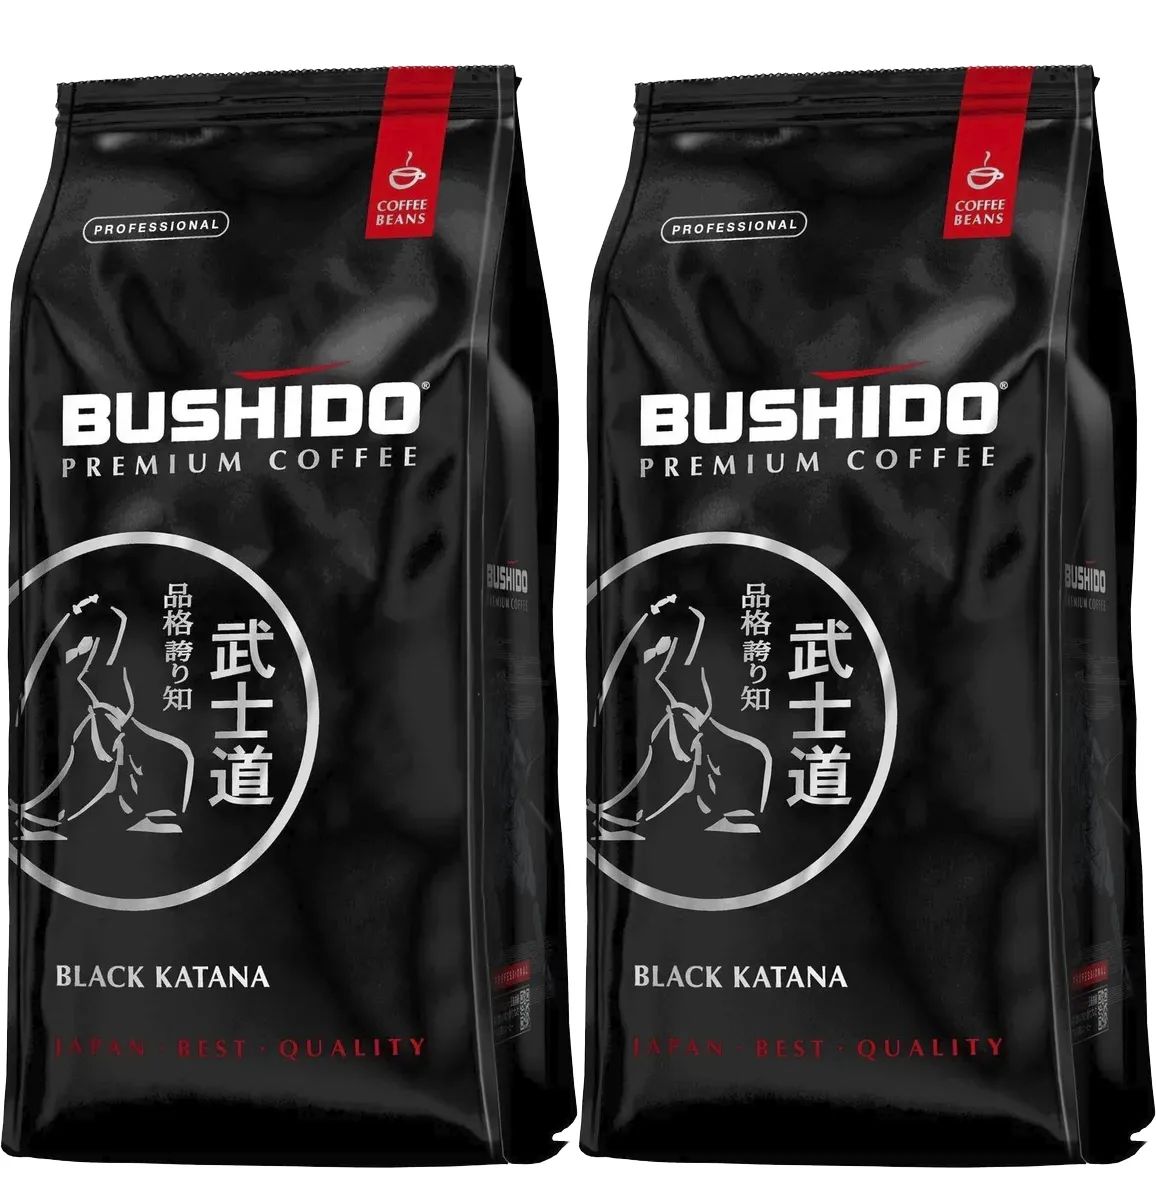 Кофе bushido black. Бушидо кофе в зернах Блэк катана. Bushido кофе капсулы. Кофе Бушидо белая пачка. Кофе Бушидо подарочный набор.